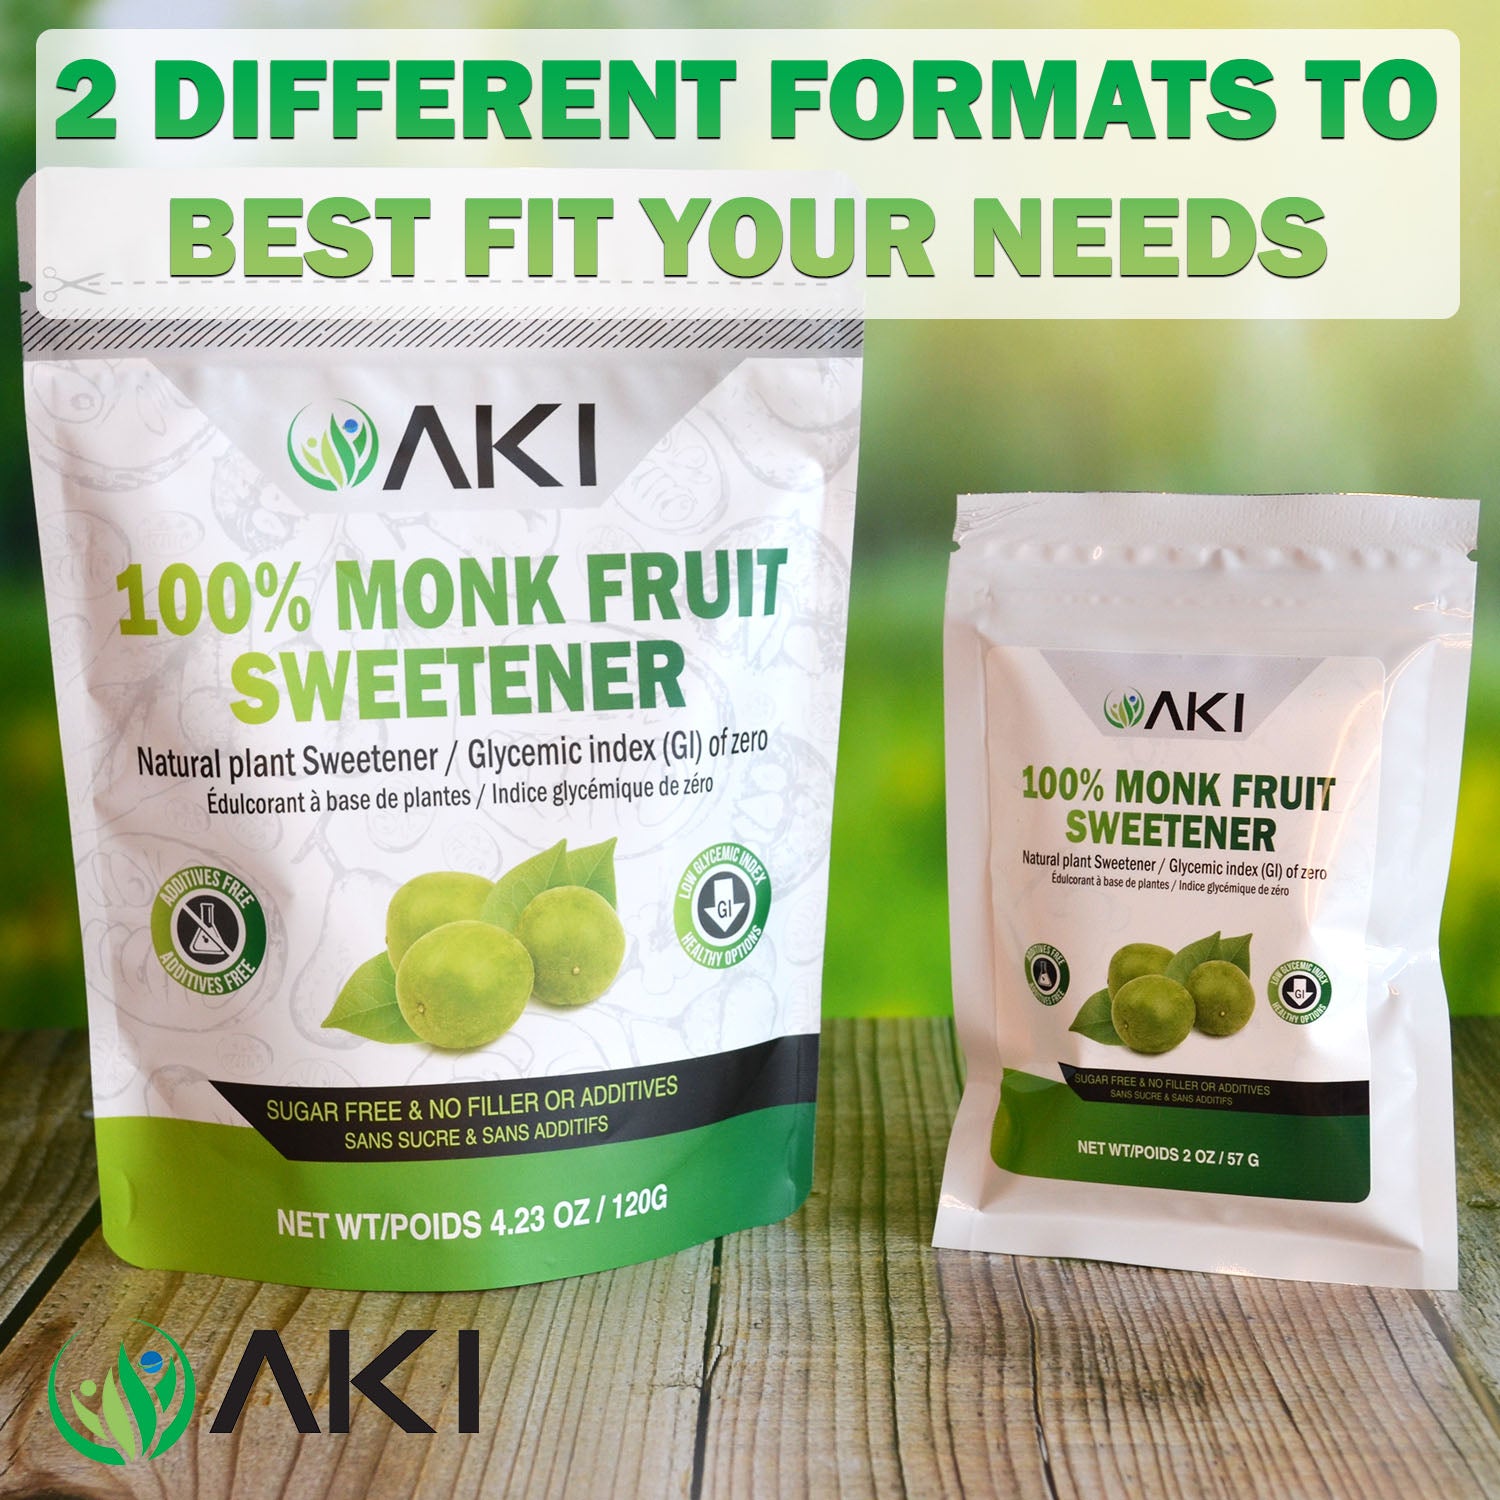 100% Pure Monk Fruit Natural (2 oz / 57 g) | Sweetener Alternatives